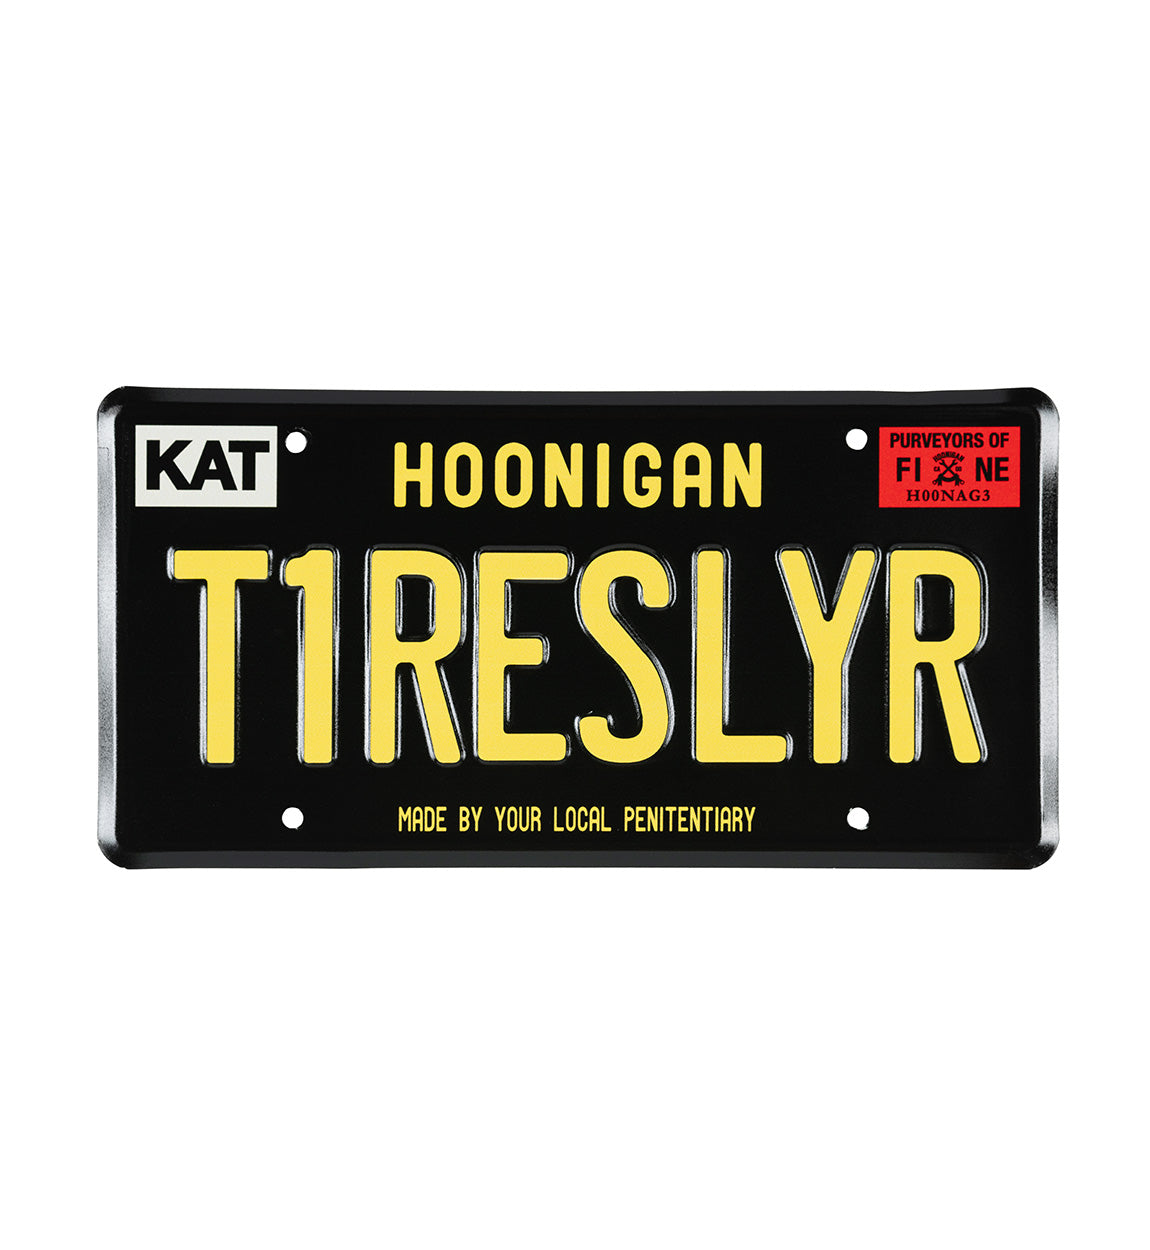 Hoonigan VINTAGE T1RESLYR License Plate